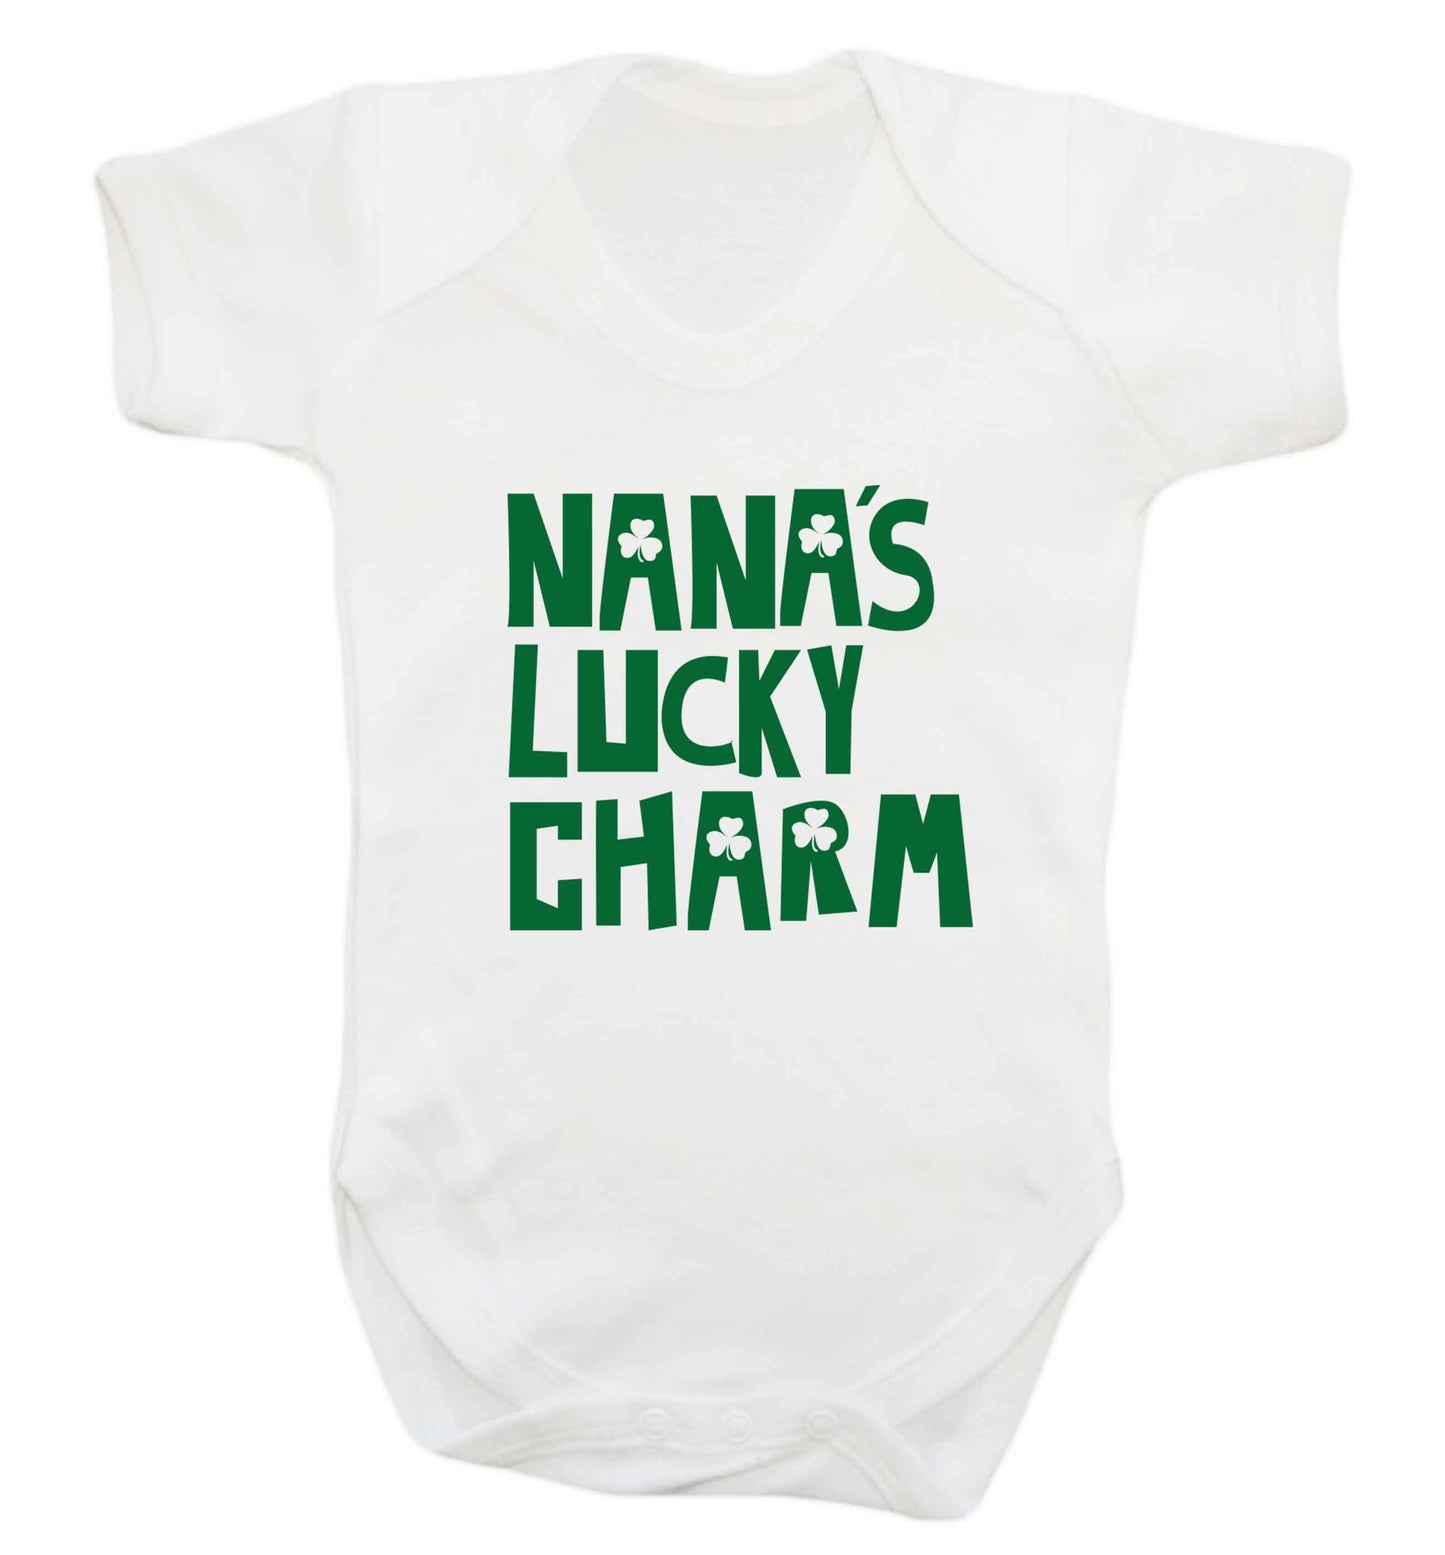 Nana's lucky charm baby vest white 18-24 months